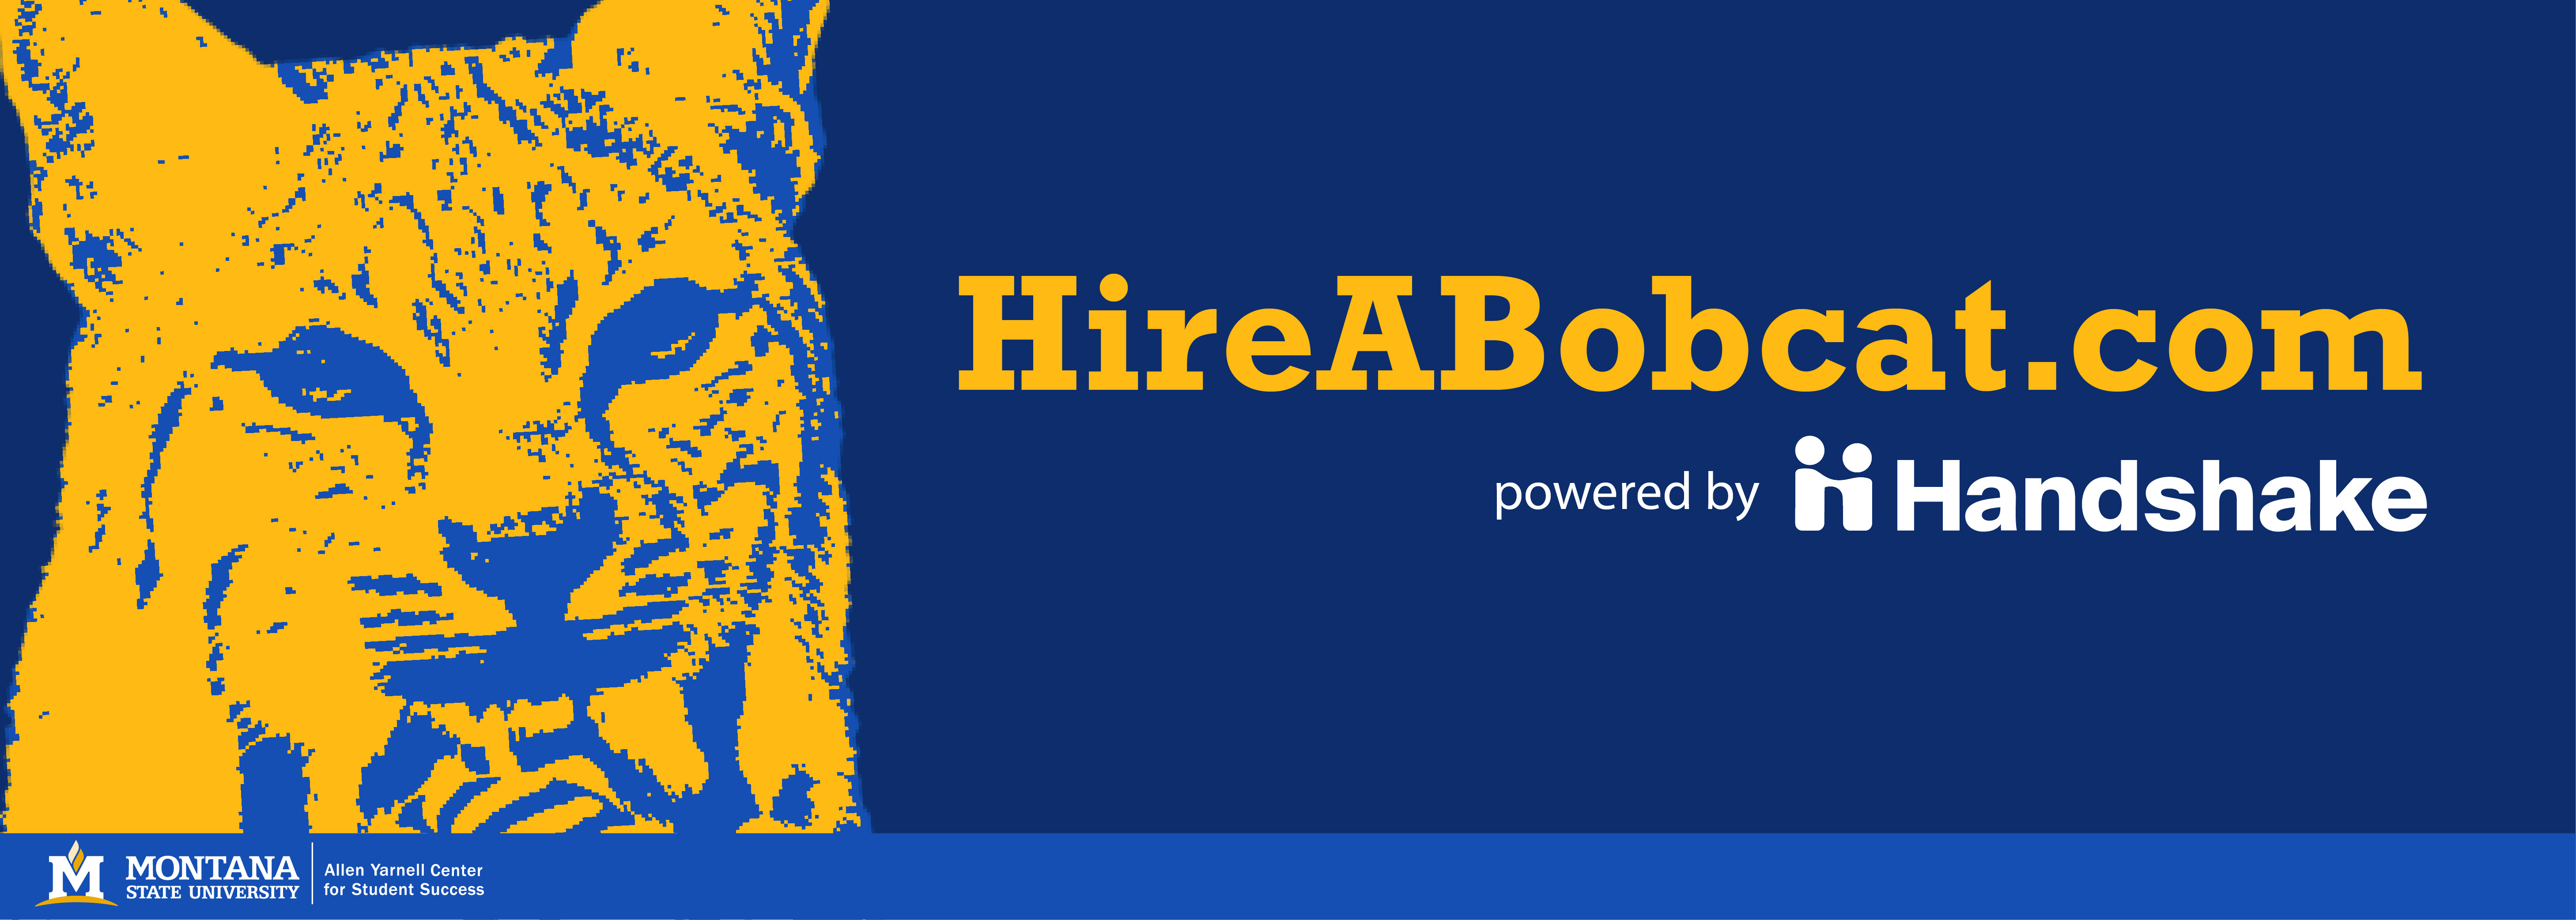 HireABobcat.com powered by handshake